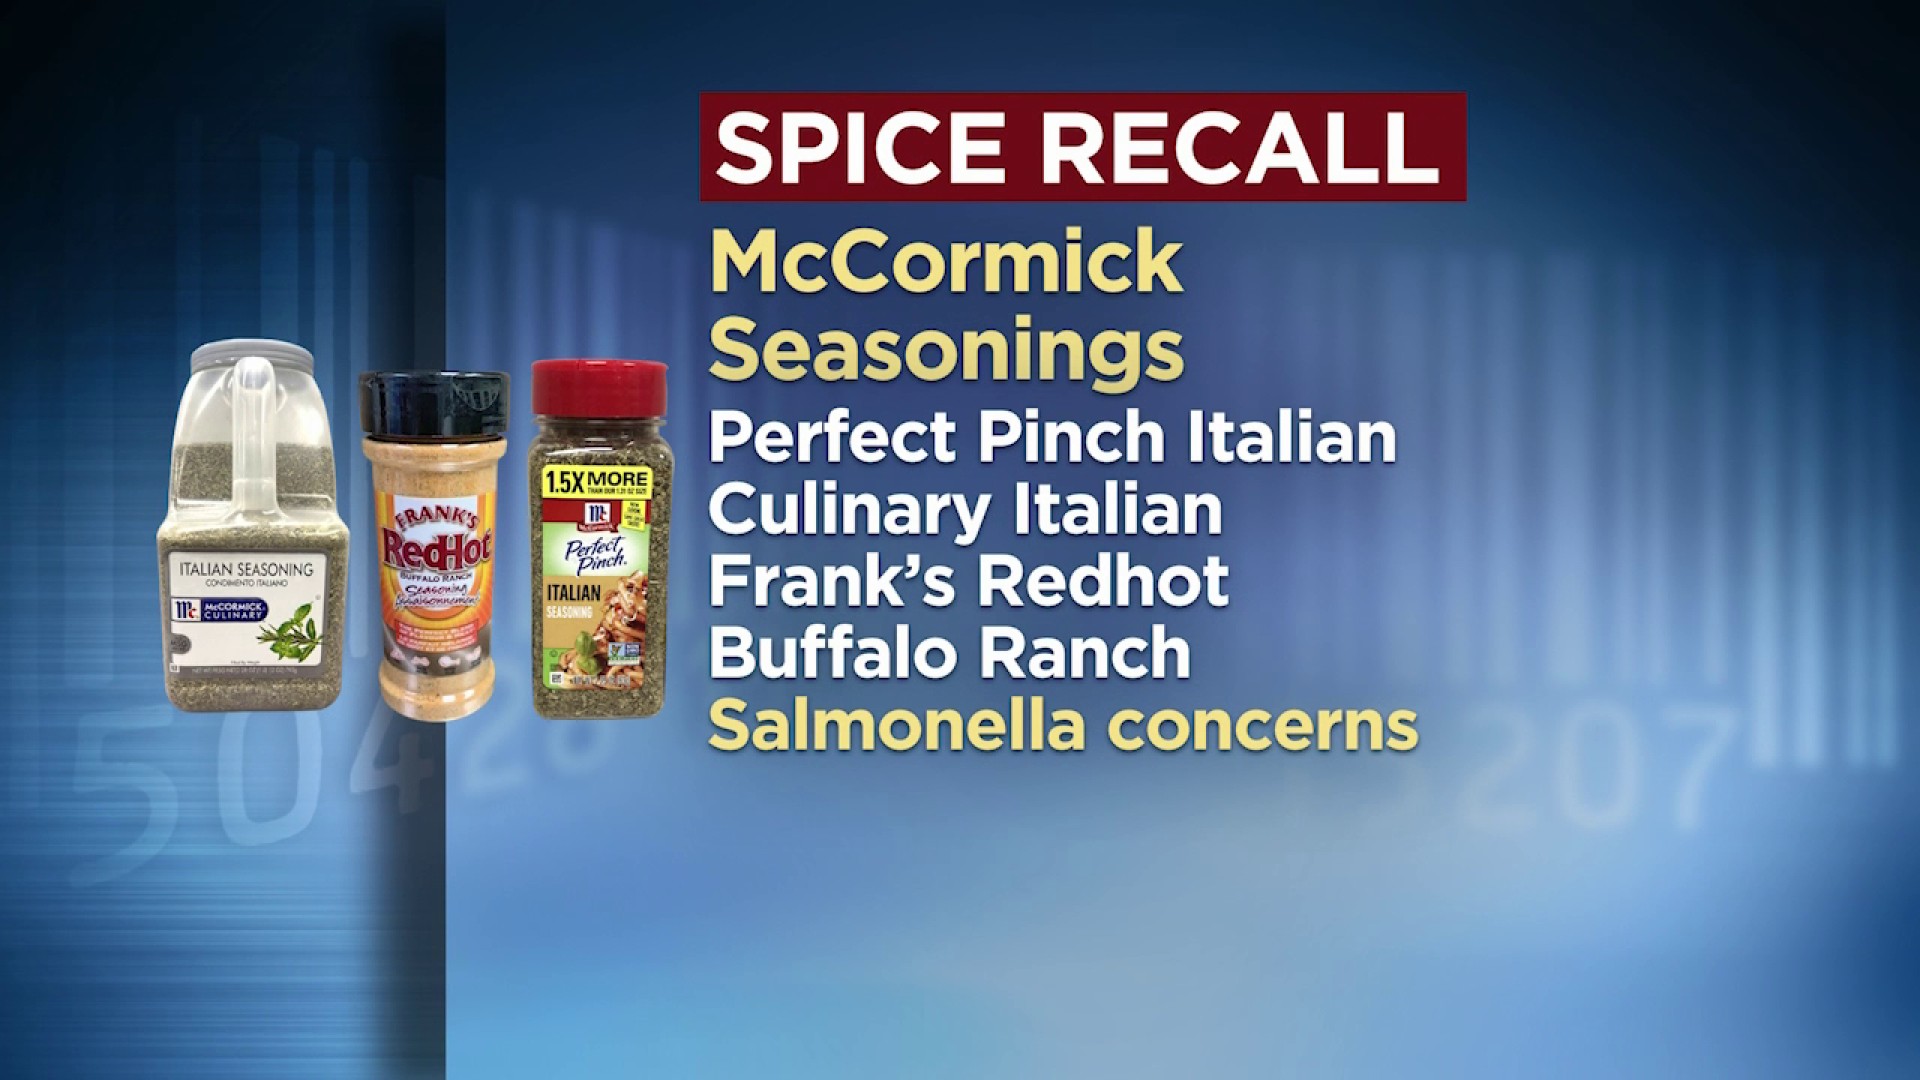 McCormick Seasonings Recalled for Possible Salmonella Contamination